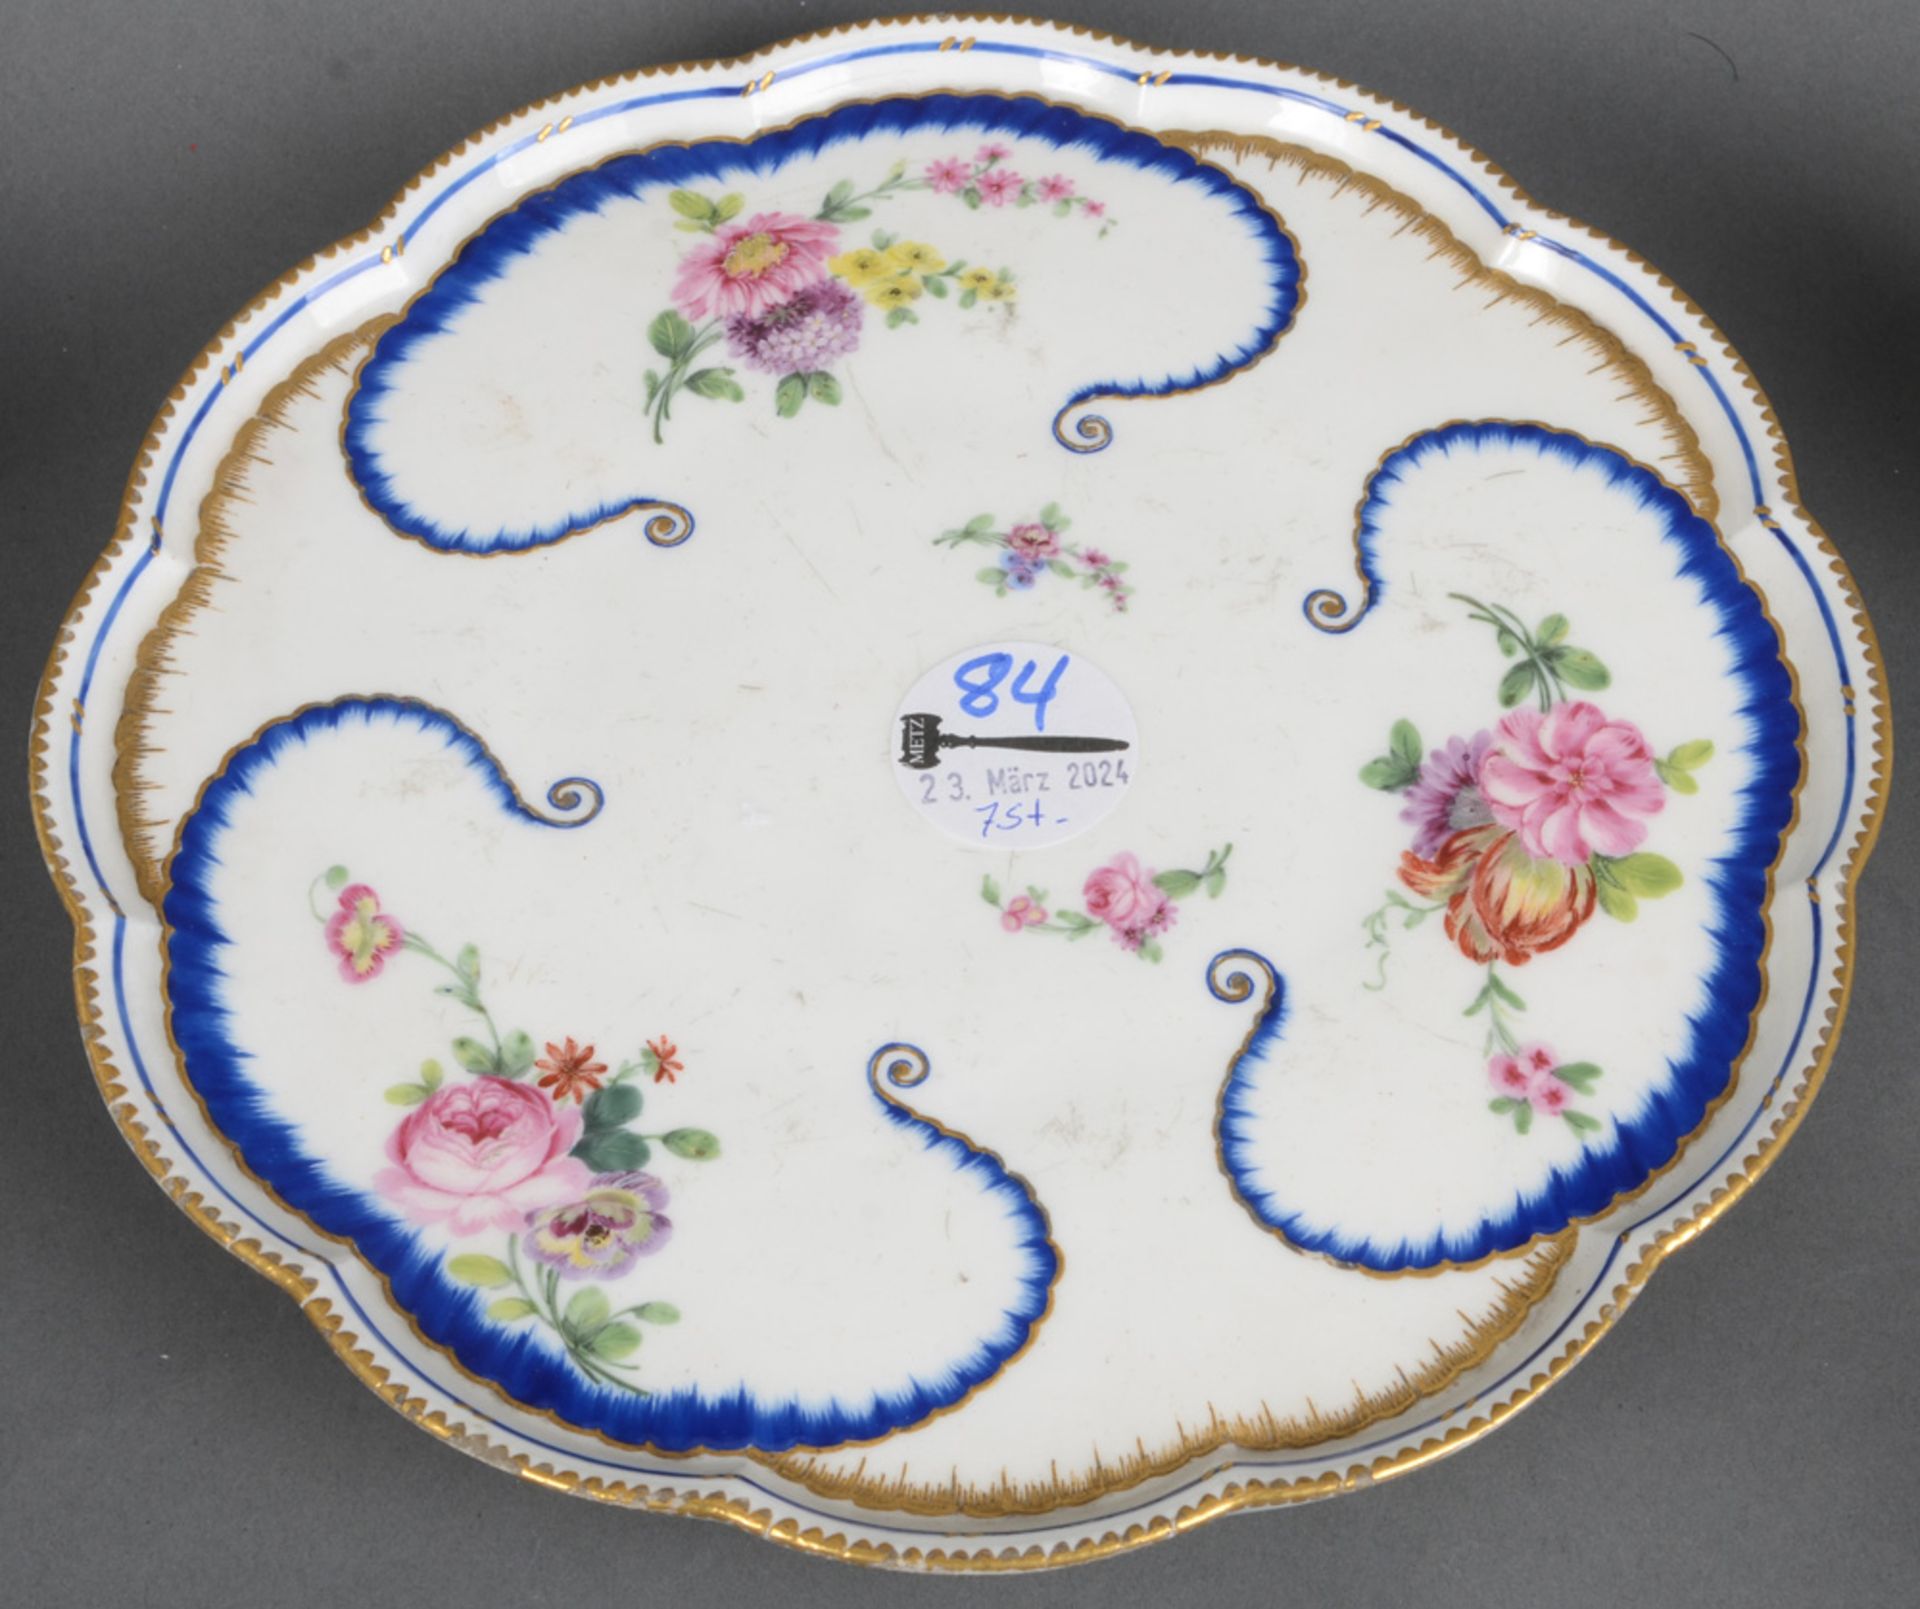 Sechs Geleebecher auf erhöhtem Tablett. Sèvres 18. Jh. Porzellan, bunt floral bemalt mit Goldrand; - Image 3 of 20